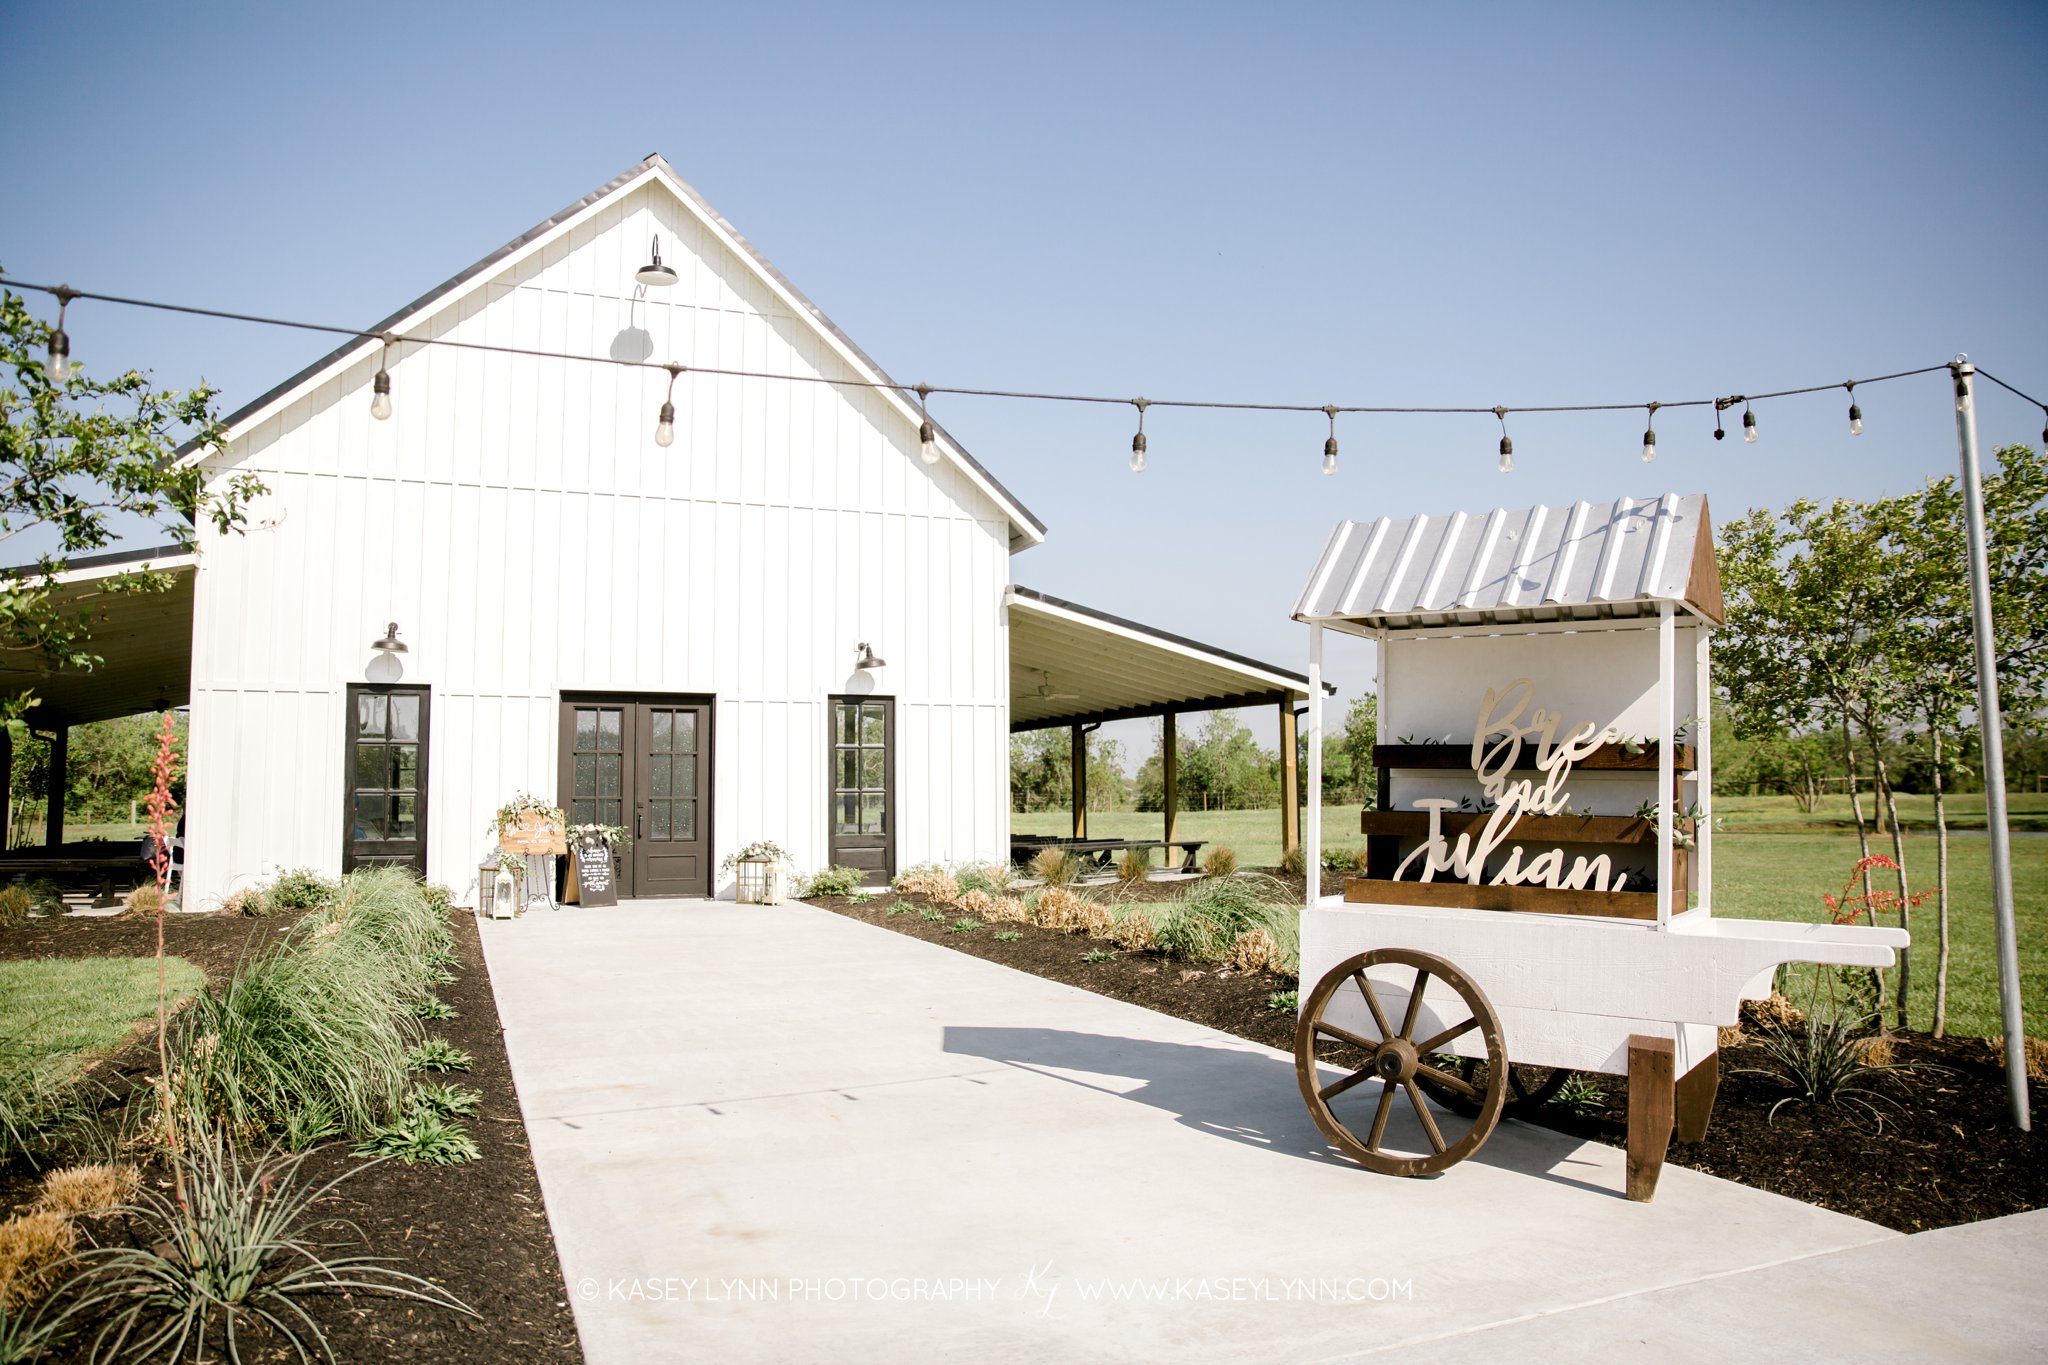 The Barn at Willowynn / Kasey Lynn Photography